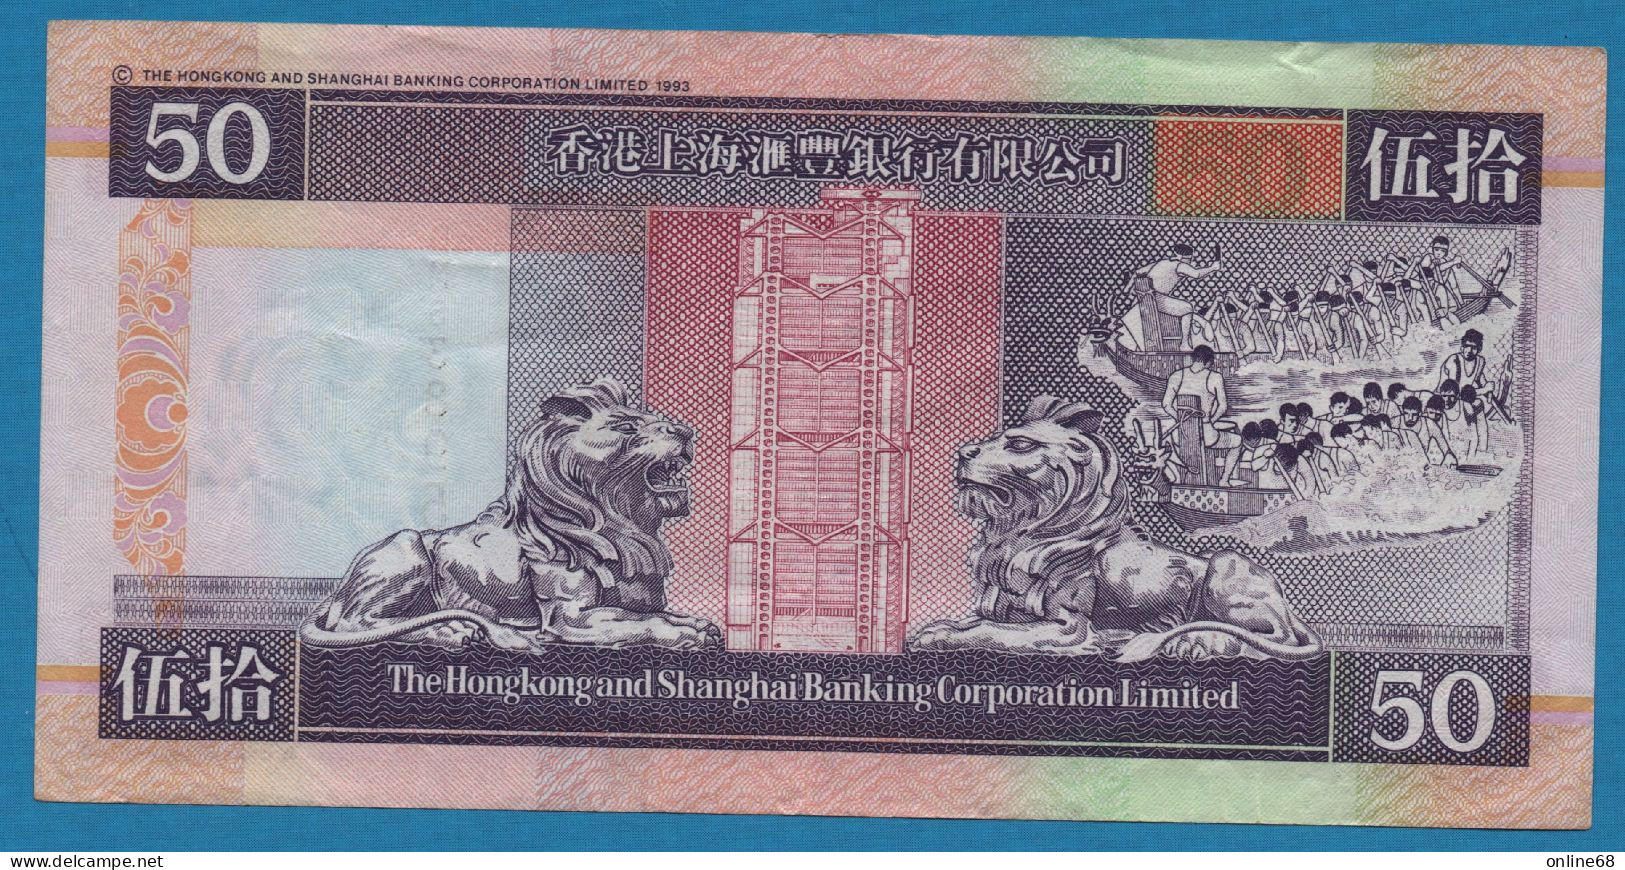 HONG KONG 50 DOLLARS 01.01.2002 # DM538959 P# 202e Hongkong & Shanghai Banking - Hongkong